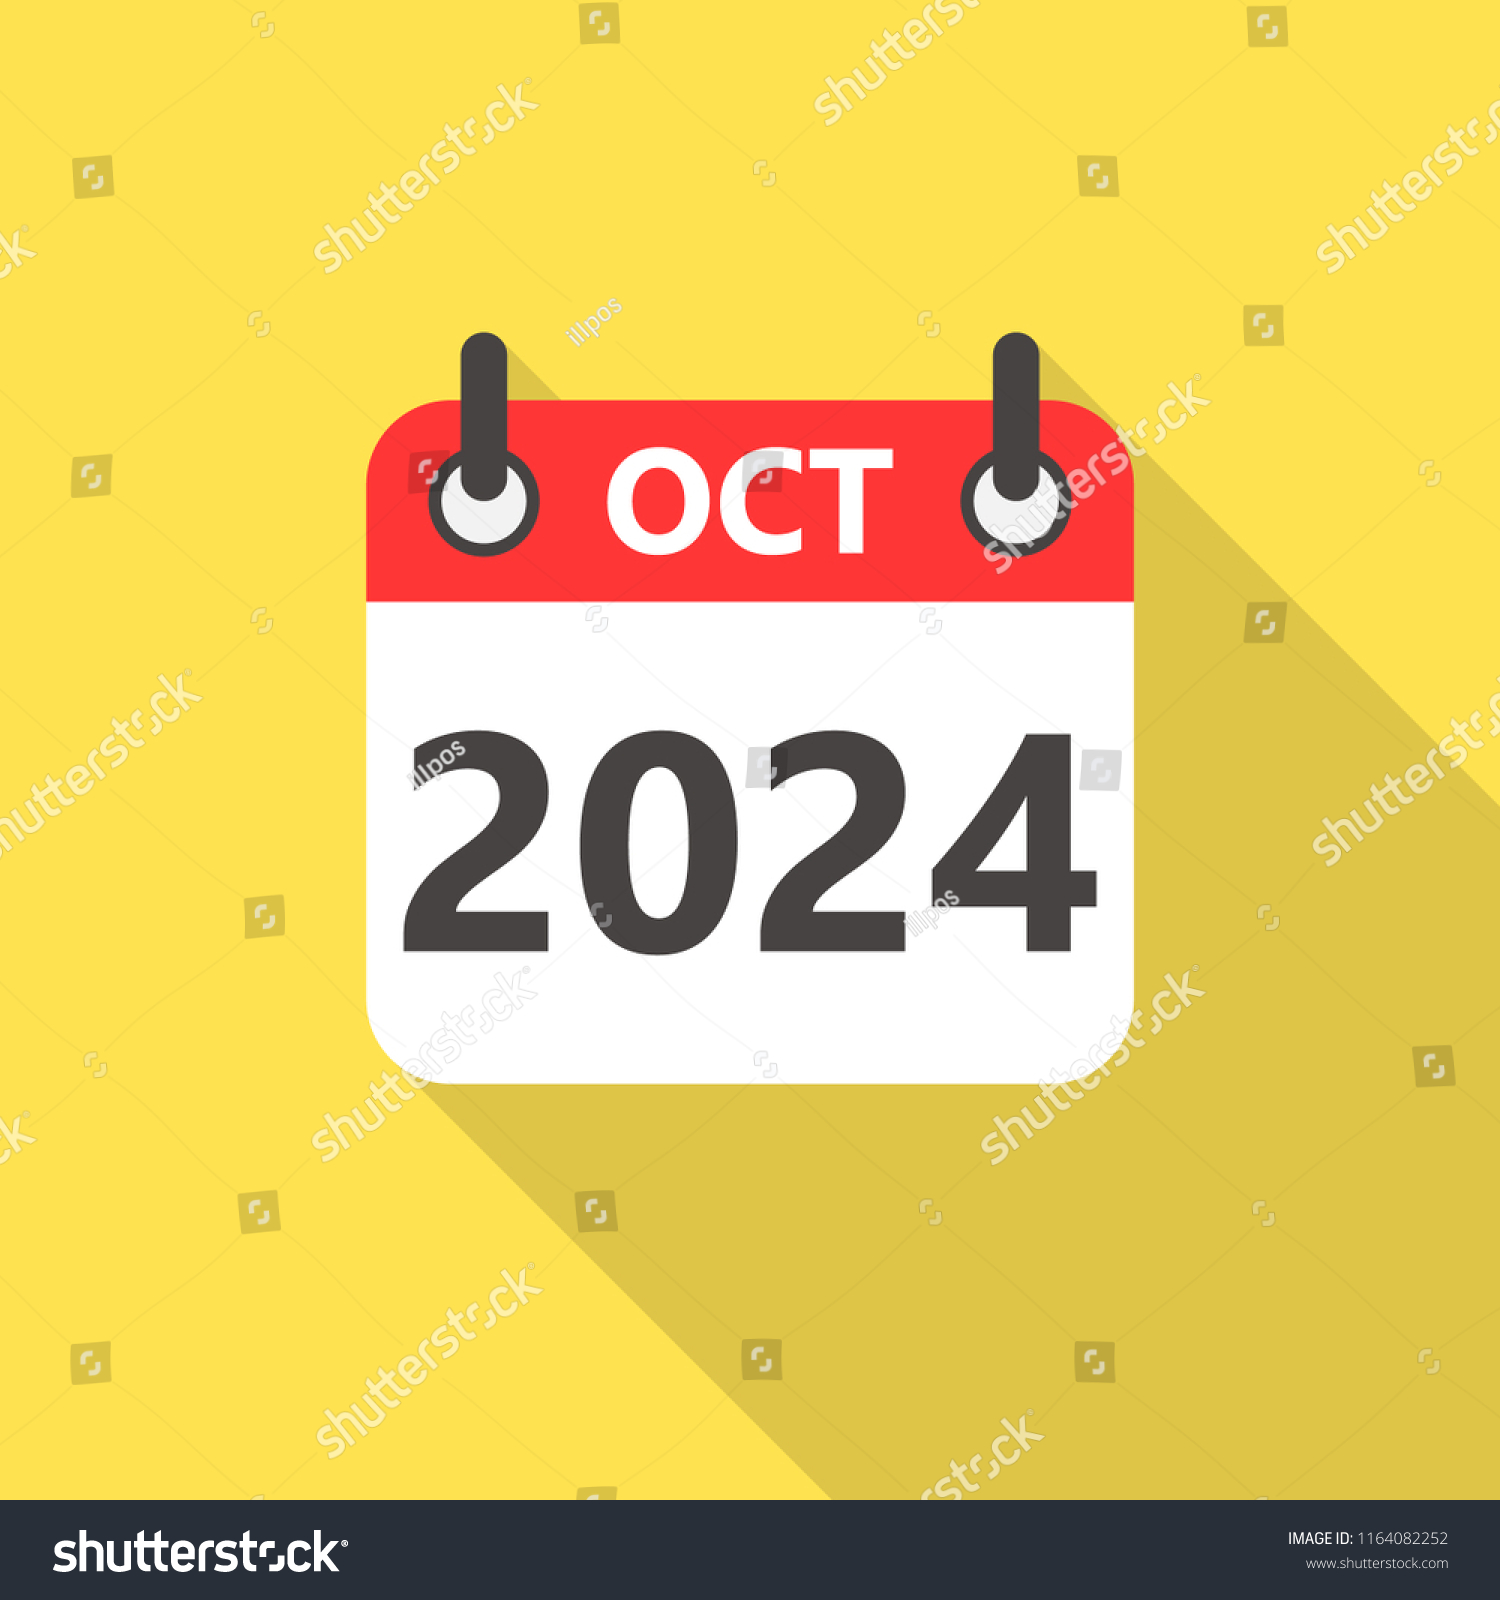 October 2024 Year Calendar Flat Style เวกเตอร์สต็อก (ปลอดค่าลิขสิทธิ์